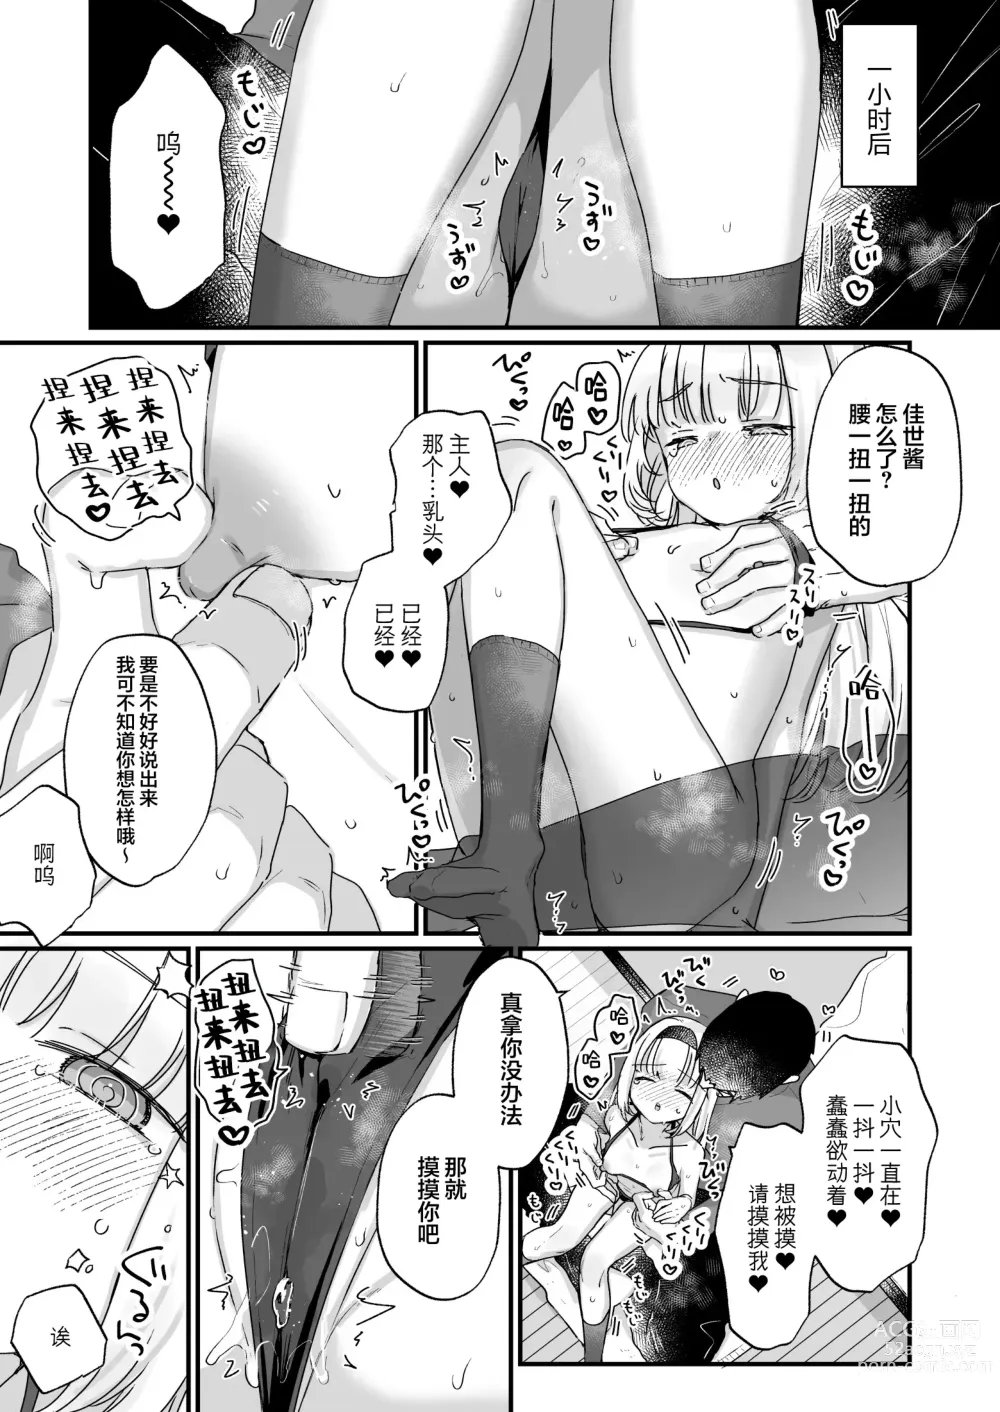 Page 14 of doujinshi 由于催眠所以「我是前些天受到您帮助的 飞机杯 」 邻家的佳世酱自以为是这样